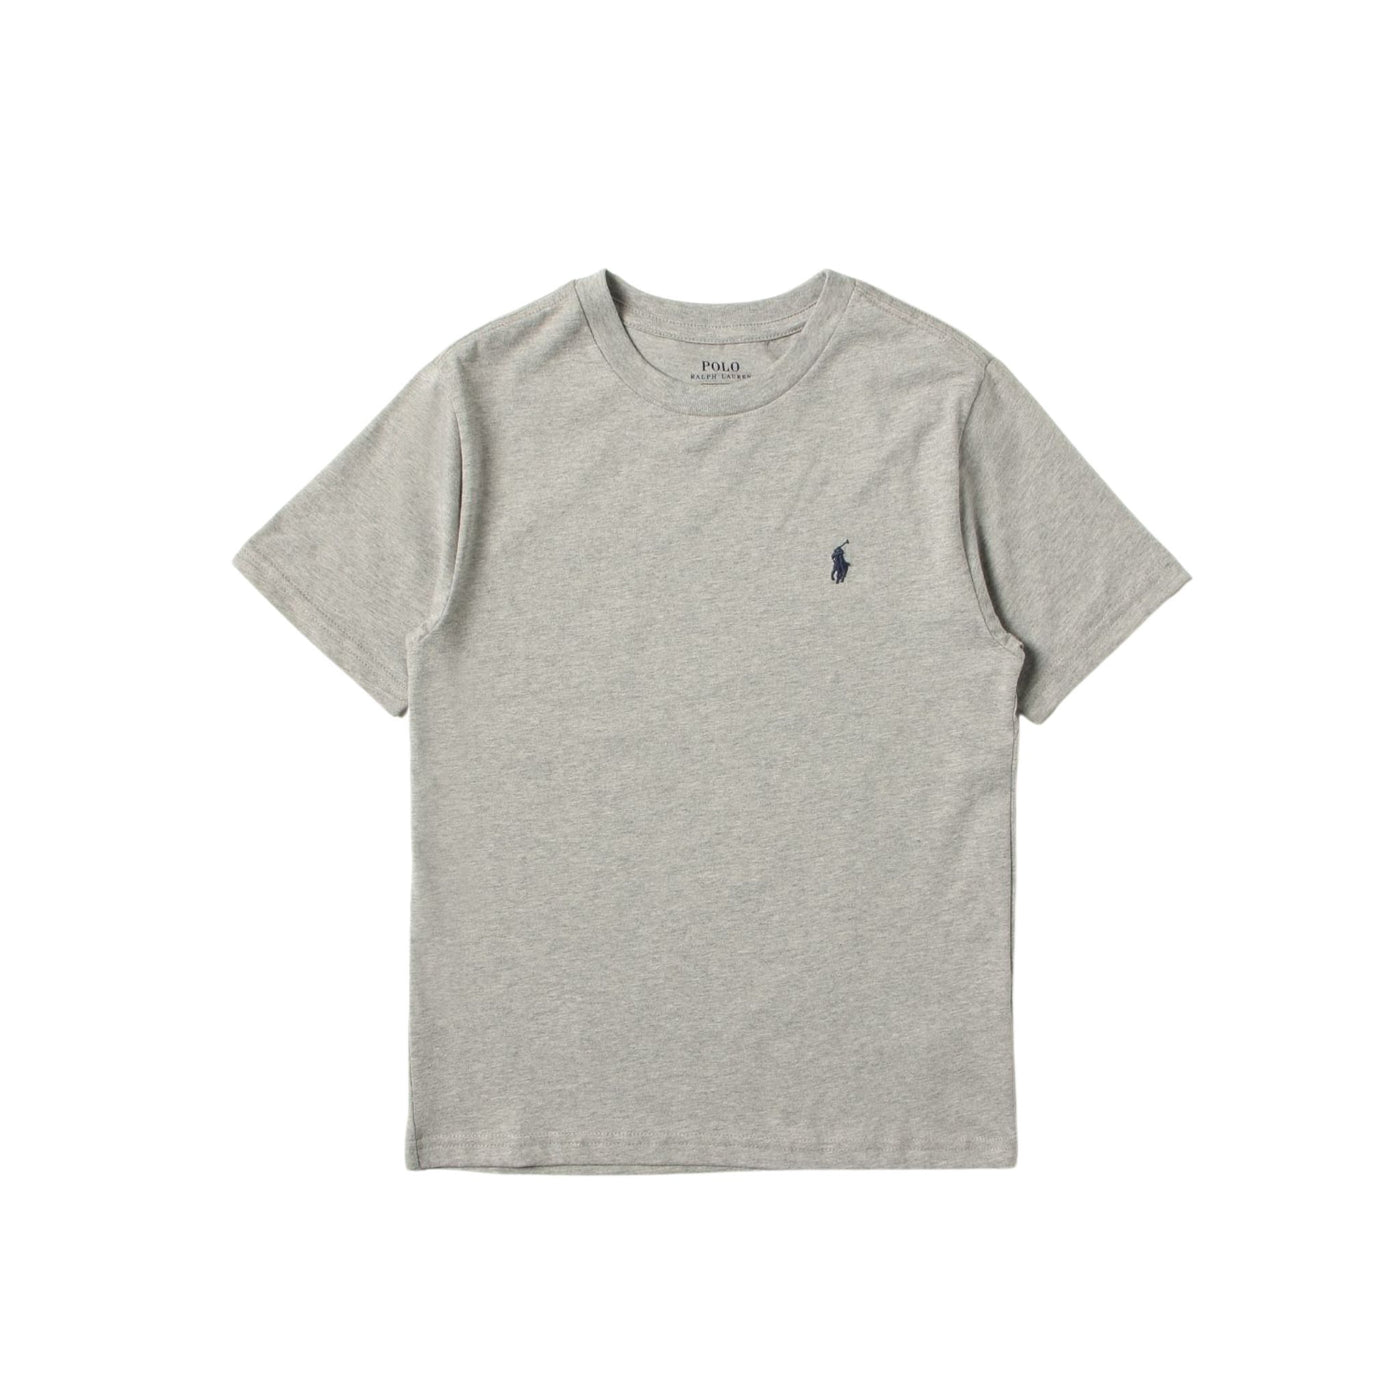 T-shirt bambino grigio Polo Ralph Lauren vista frontale